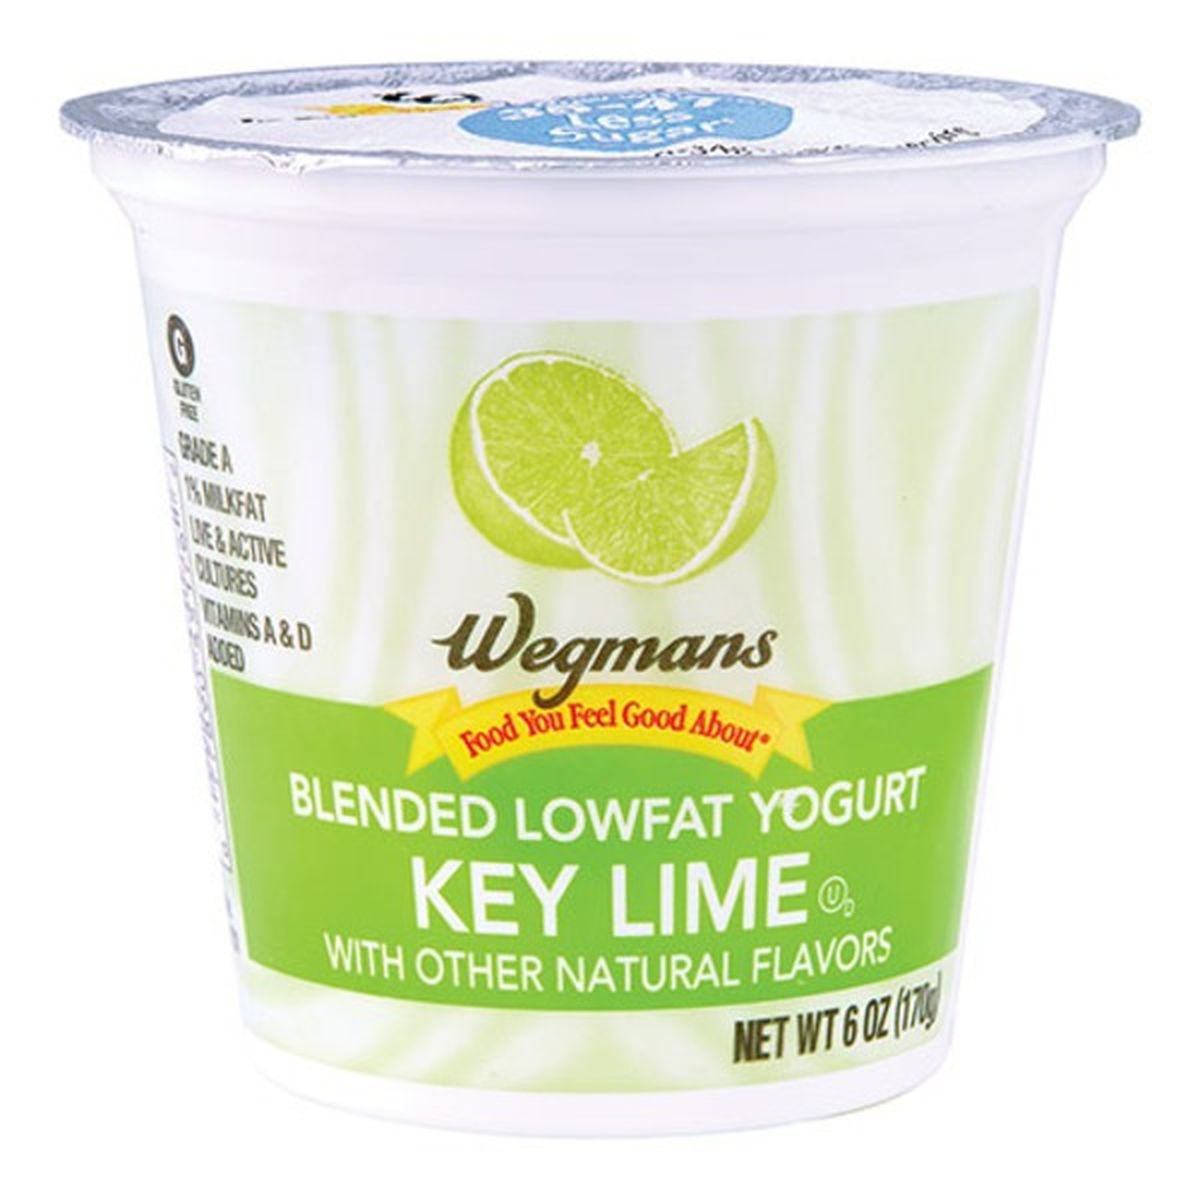 Calories in Wegmans Lowfat Blended Key Lime Yogurt